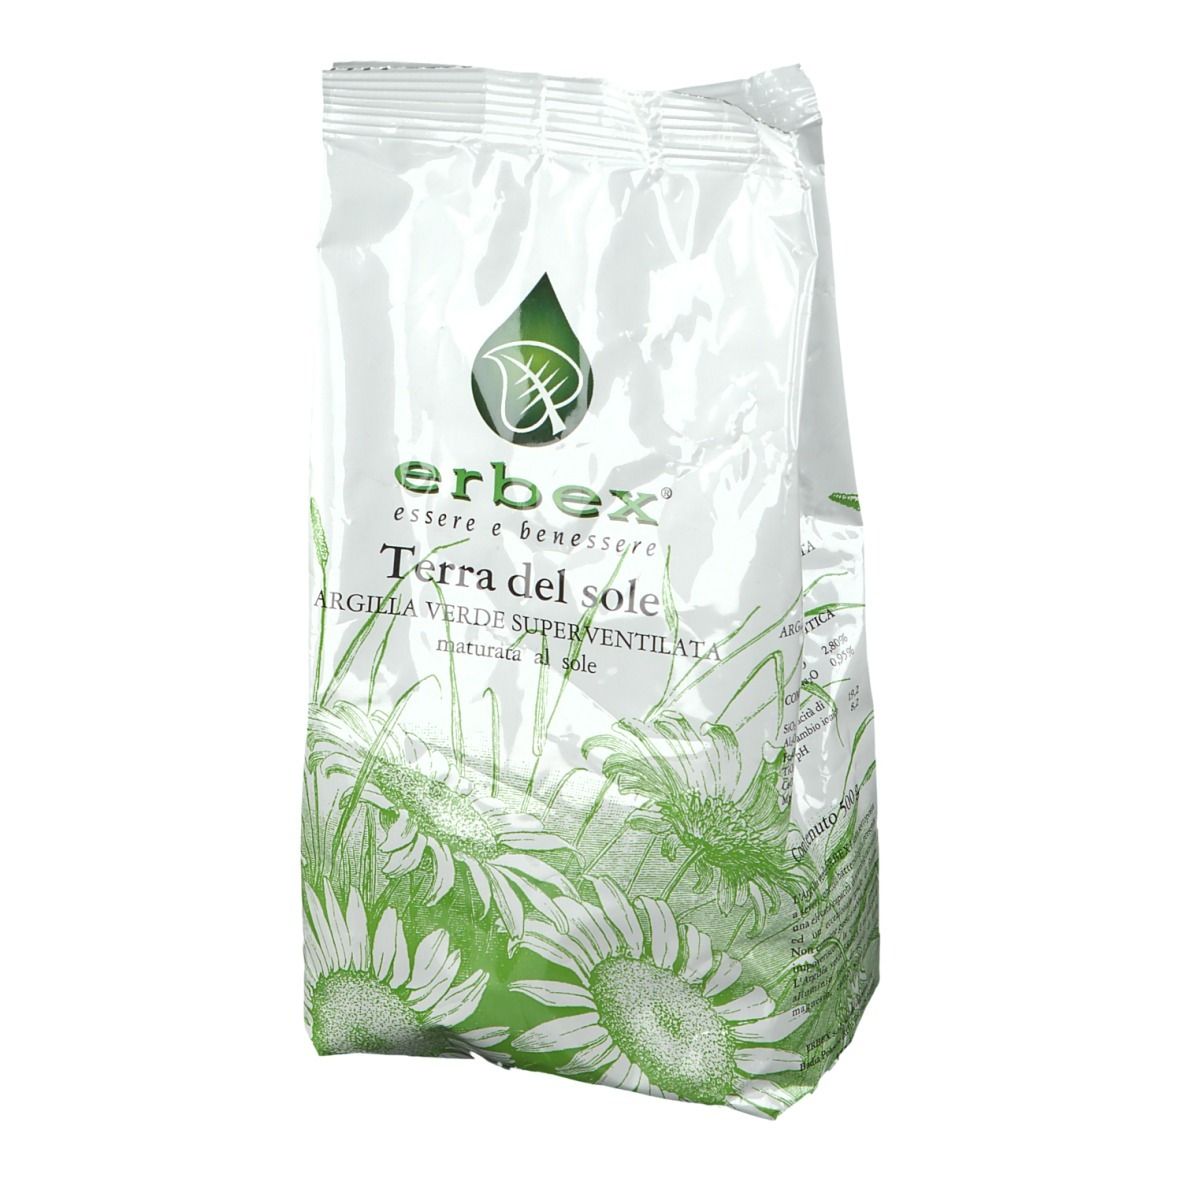 Erbex® Argilla Verde Superventilata